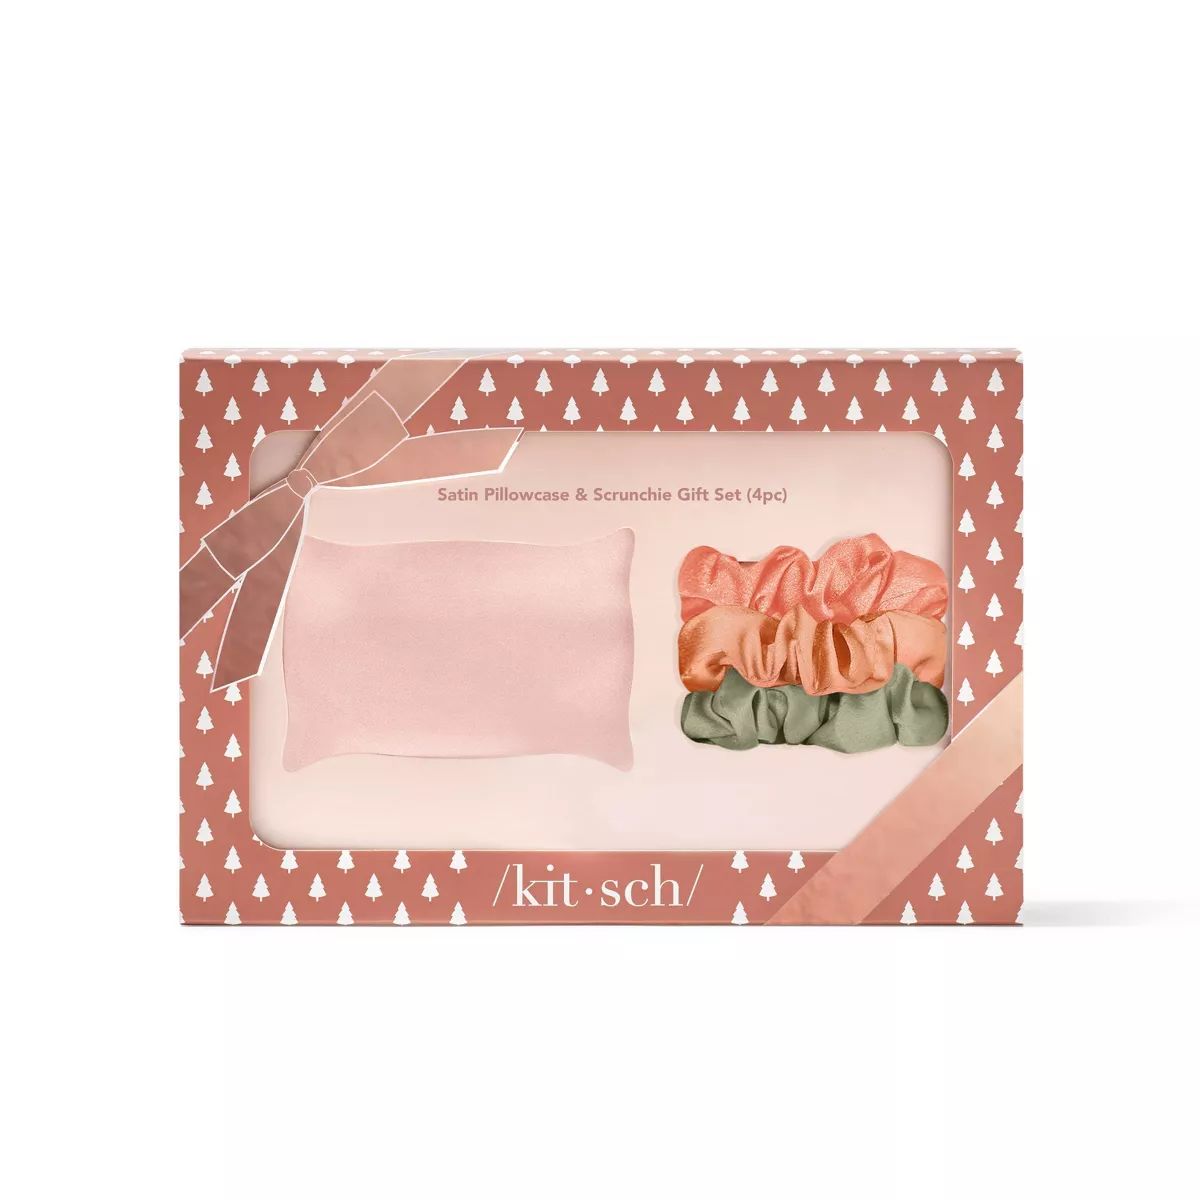 Kitsch Satin Pillowcase Scrunchie Hair Styling Gift Set - 4ct | Target